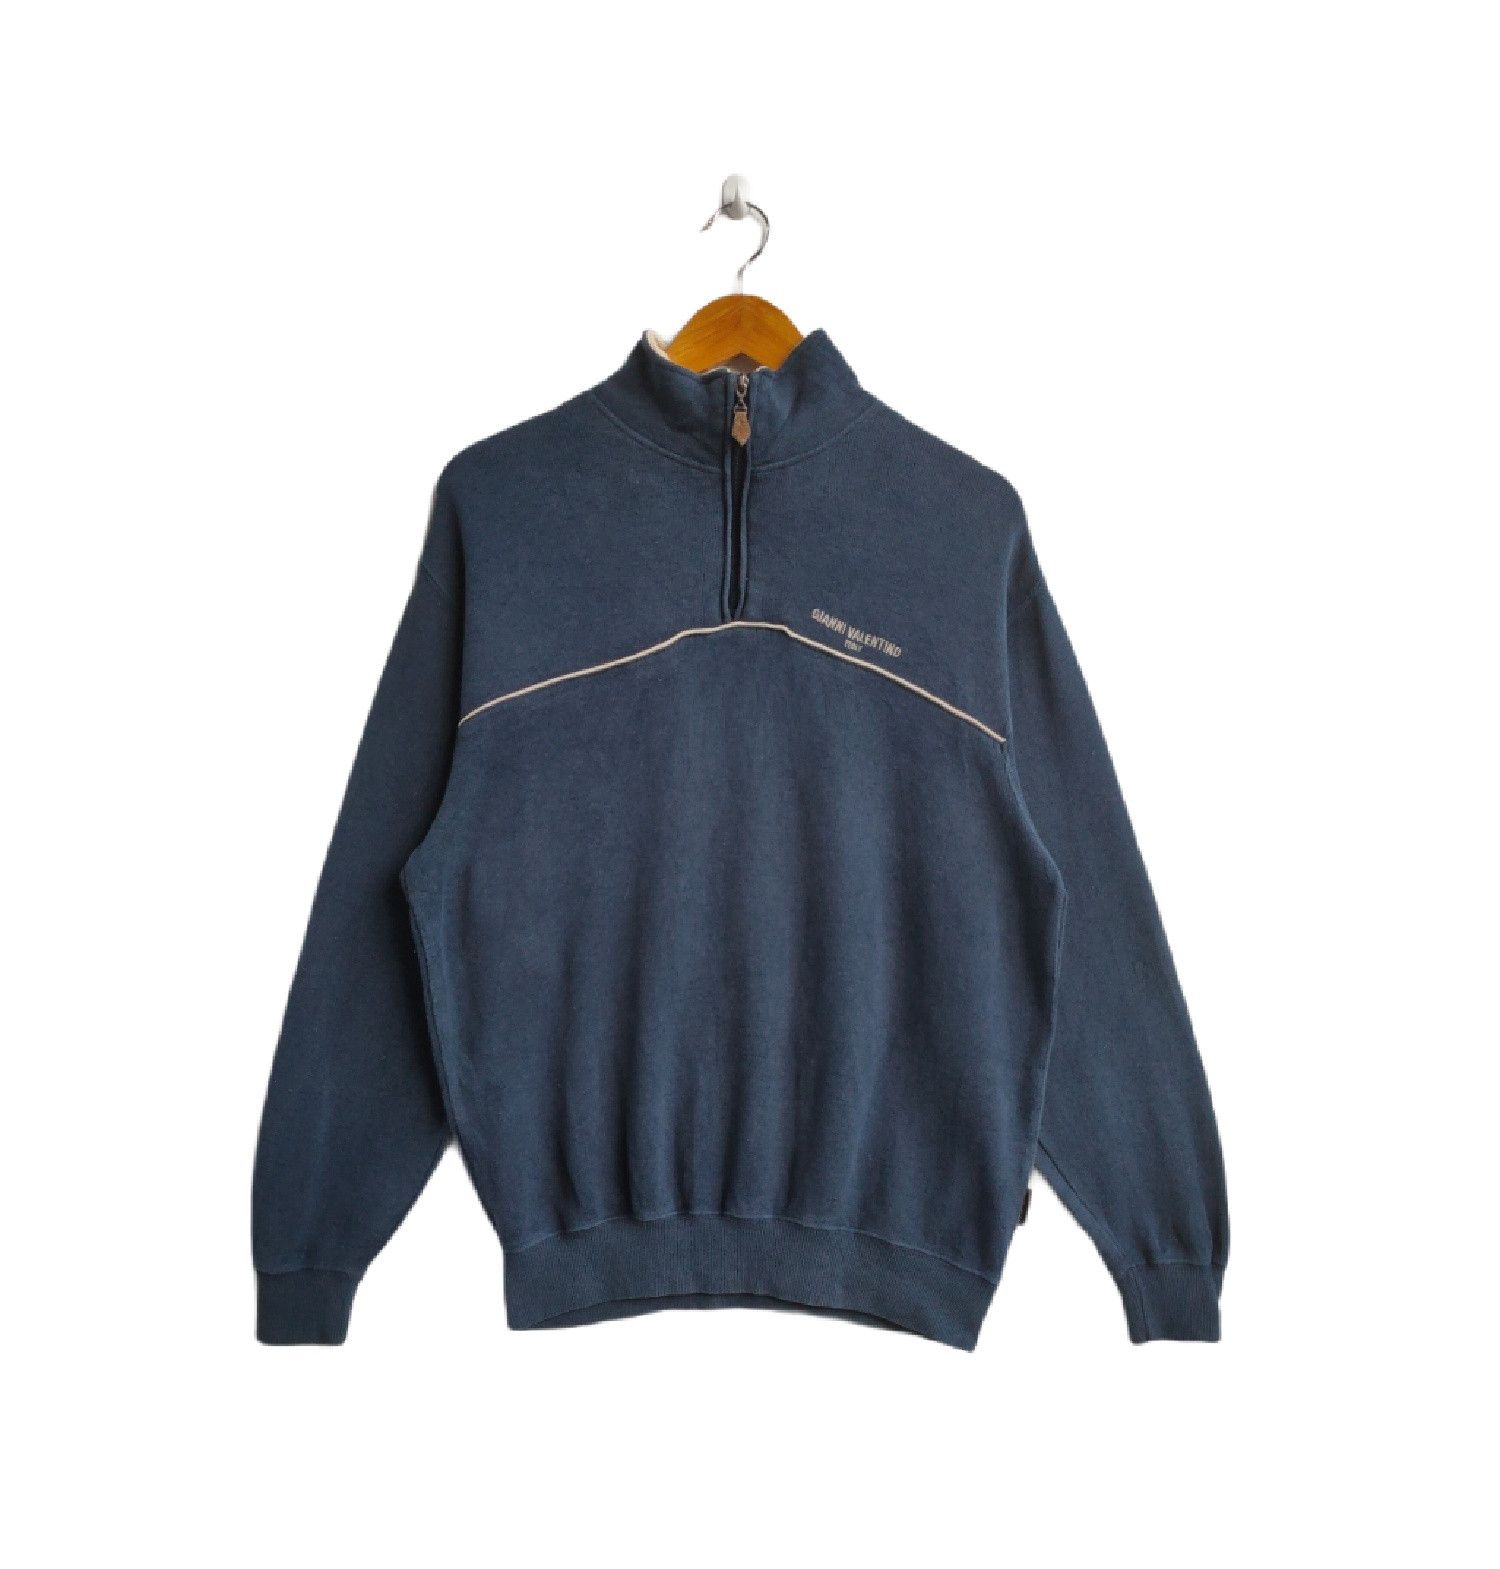 Vintage RARE! Vintage Sweatshirt Gianni Valentino Italy Pullover Size US M / EU 48-50 / 2 - 1 Preview